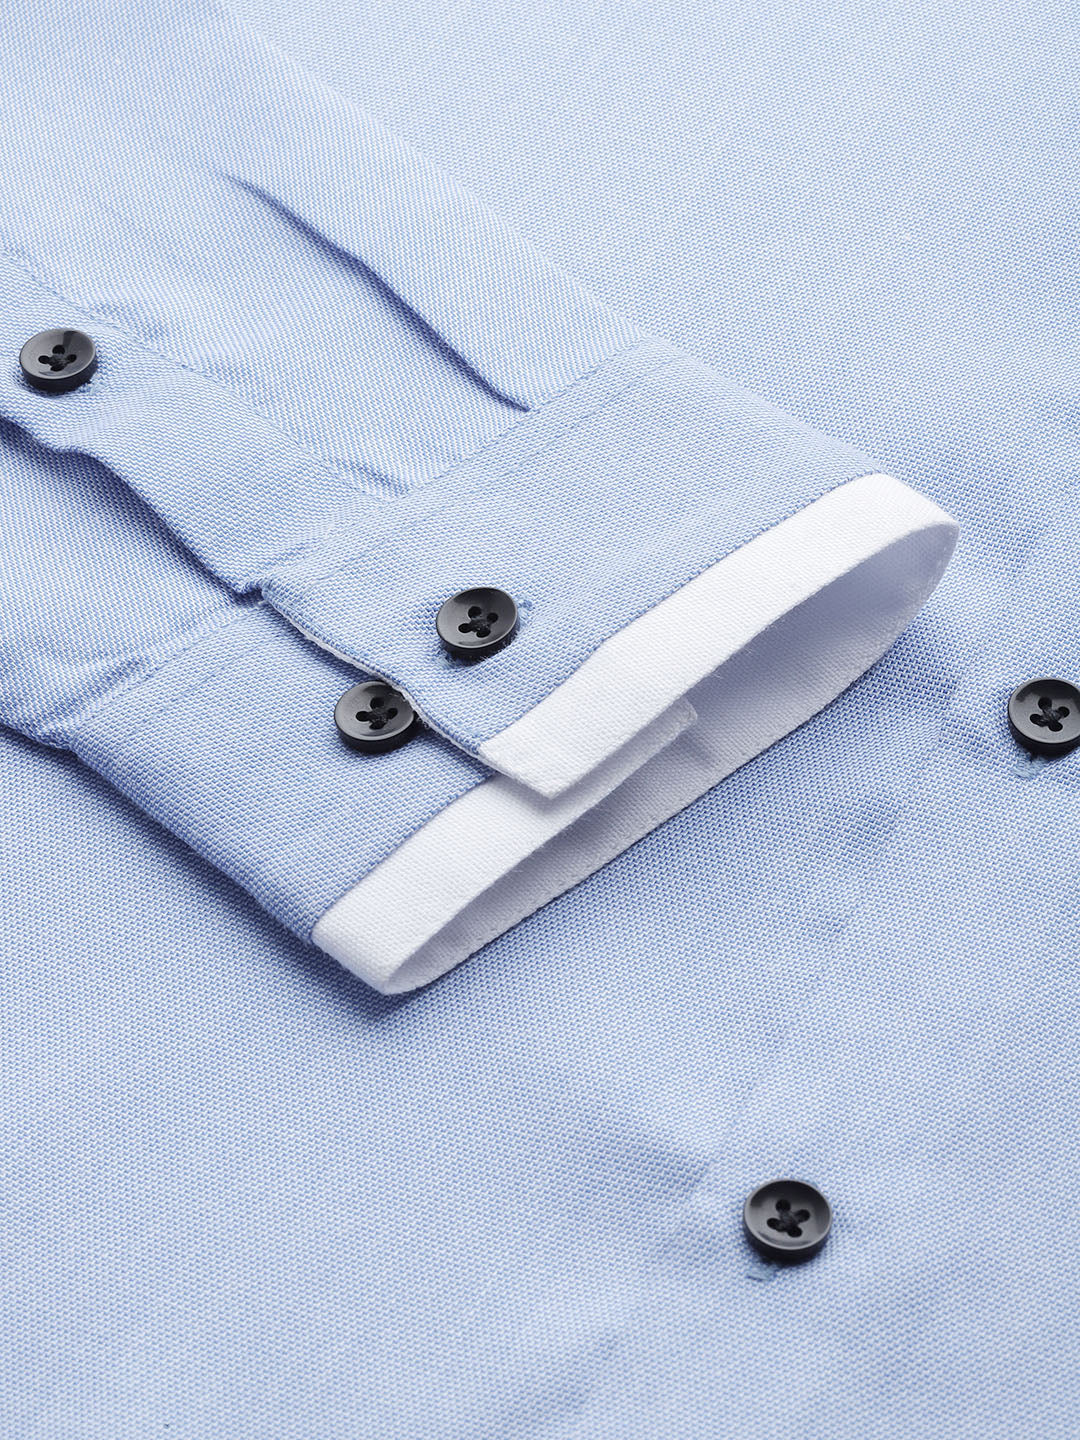 Men's  Cotton Solid Formal Shirts ( SF 796Blue ) - Jainish